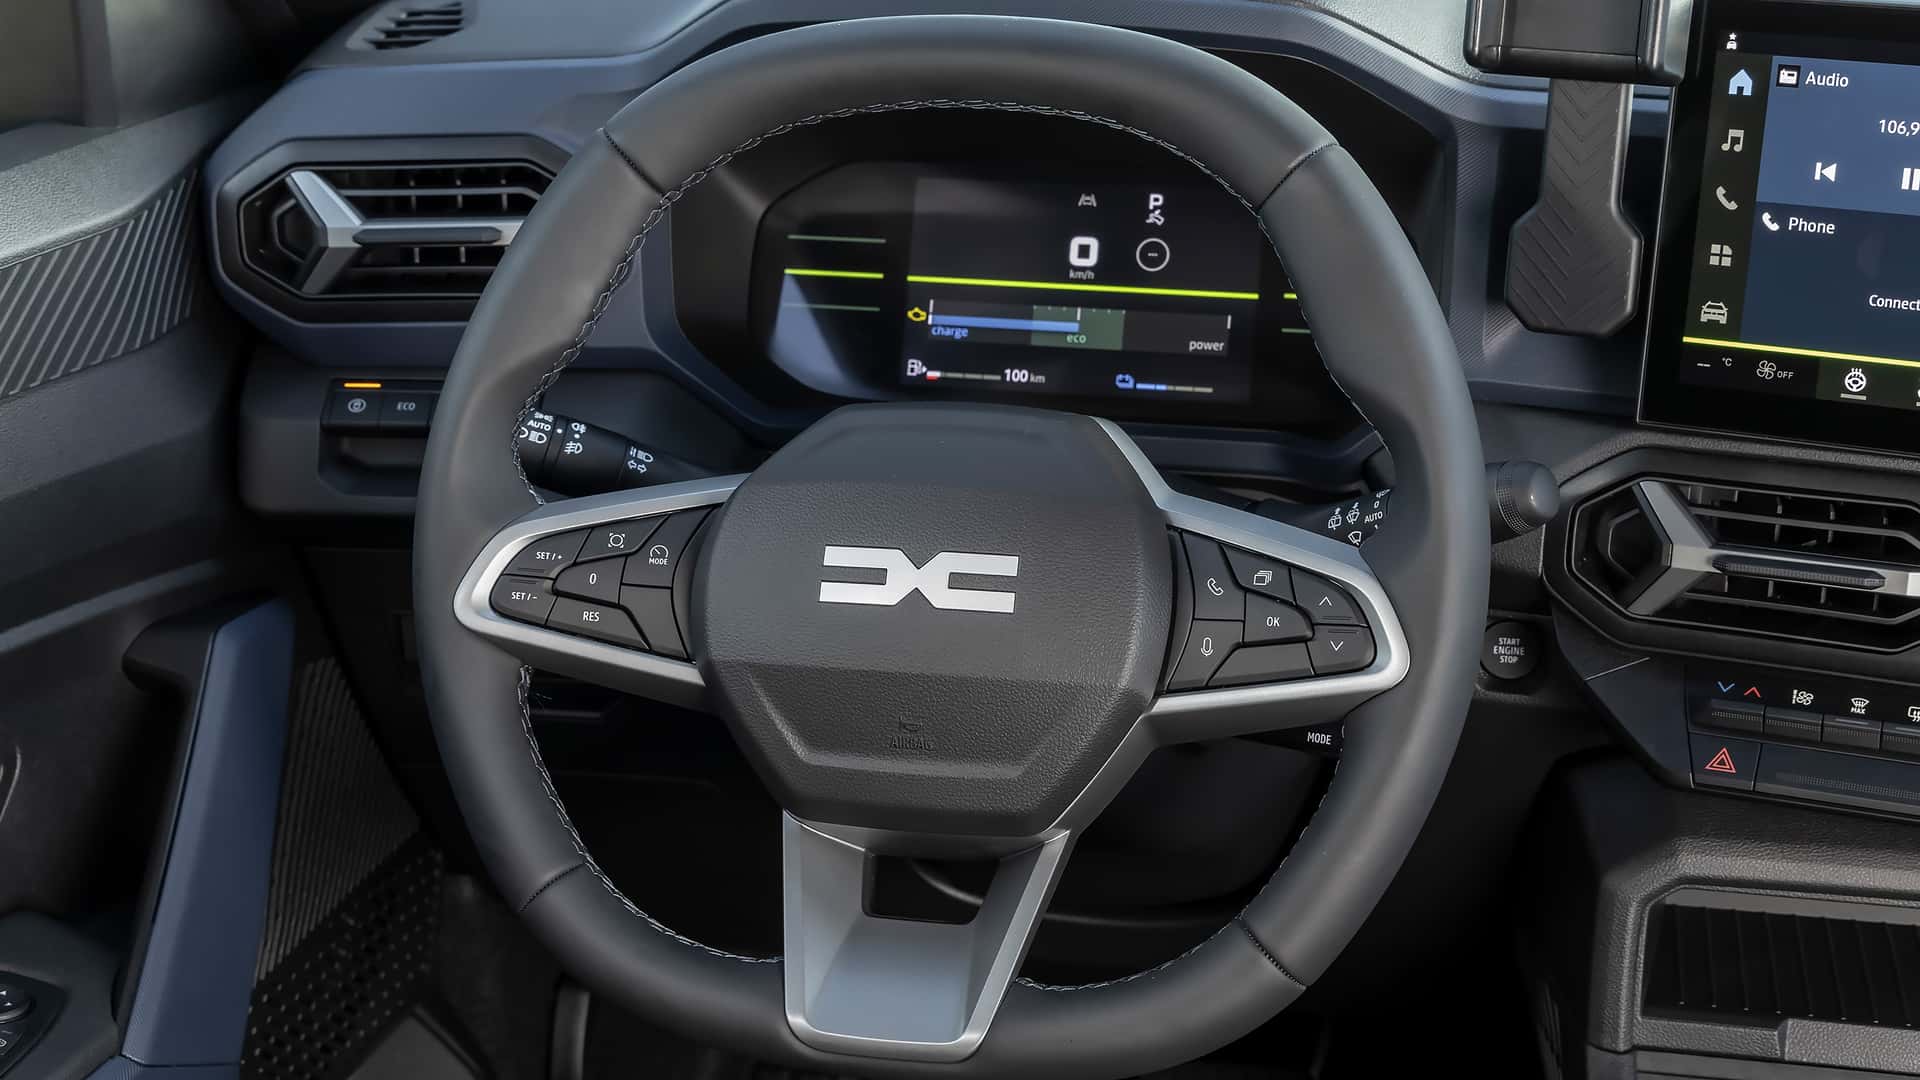 Фото Renault Duster NEW в новом кузове, видео-обзор модели - Автосалон